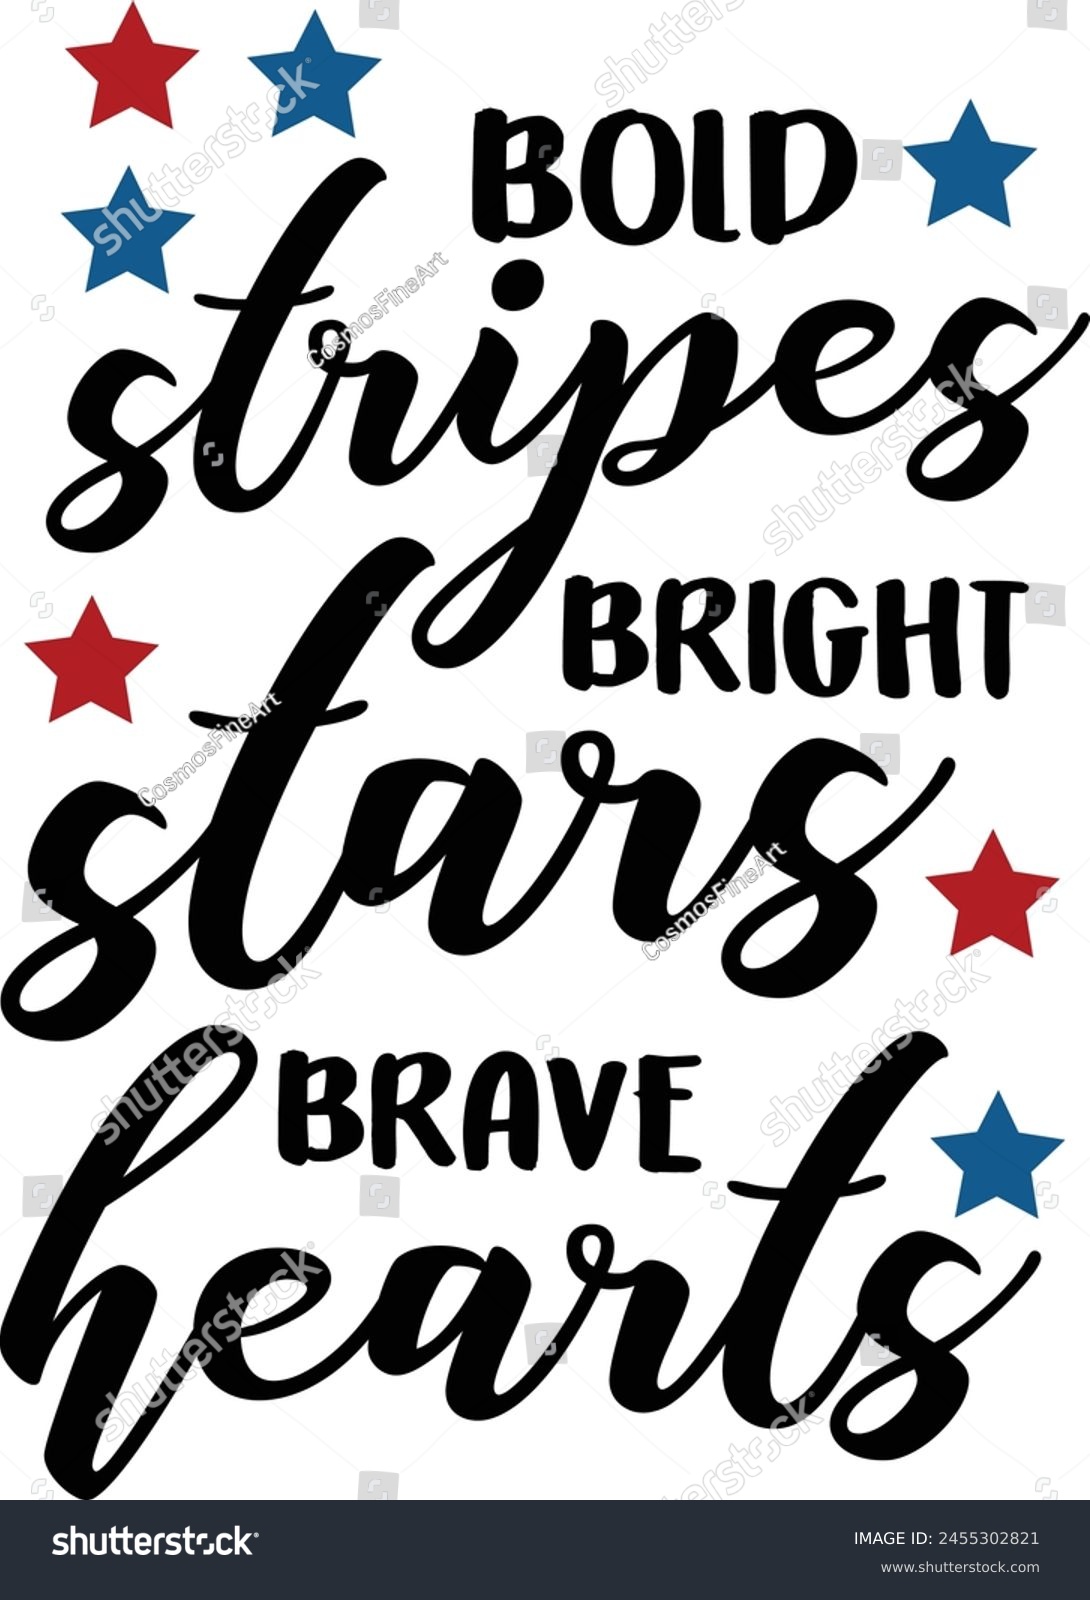 SVG of Bold Stripes Bright Stars Brave Hearts 4th Of July Typography Design svg